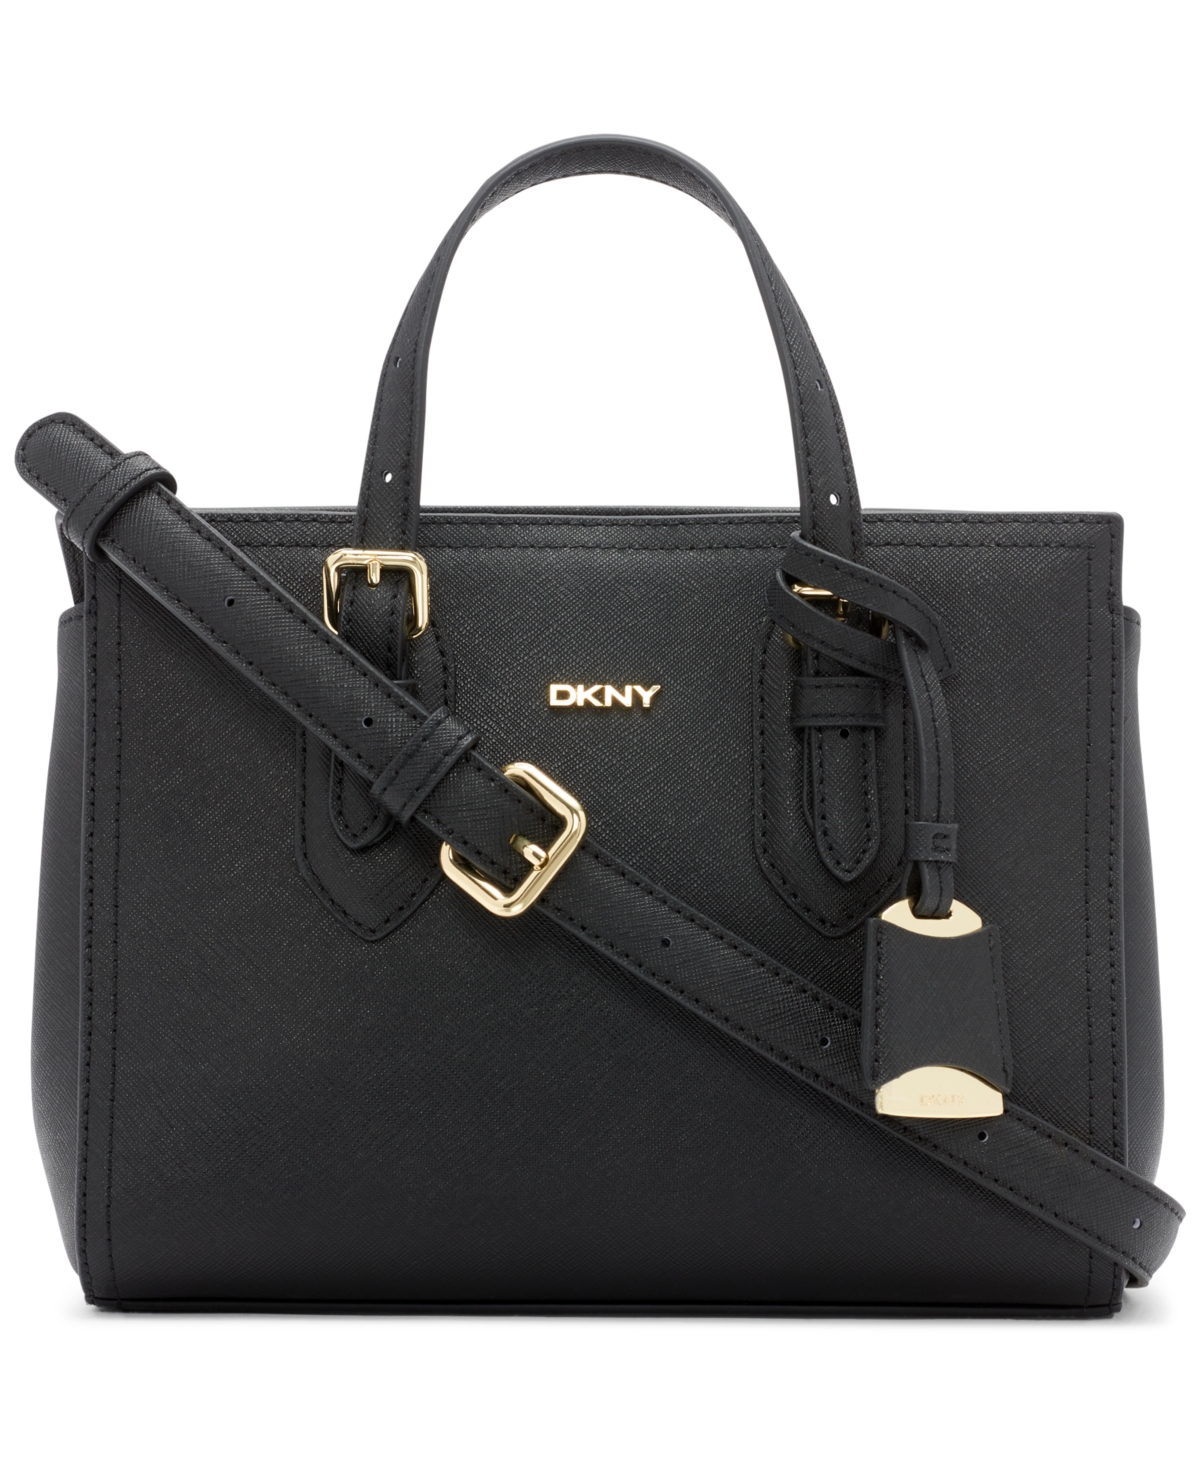 Dkny Bibi Satchel Bag In Black/gold-tone | ModeSens